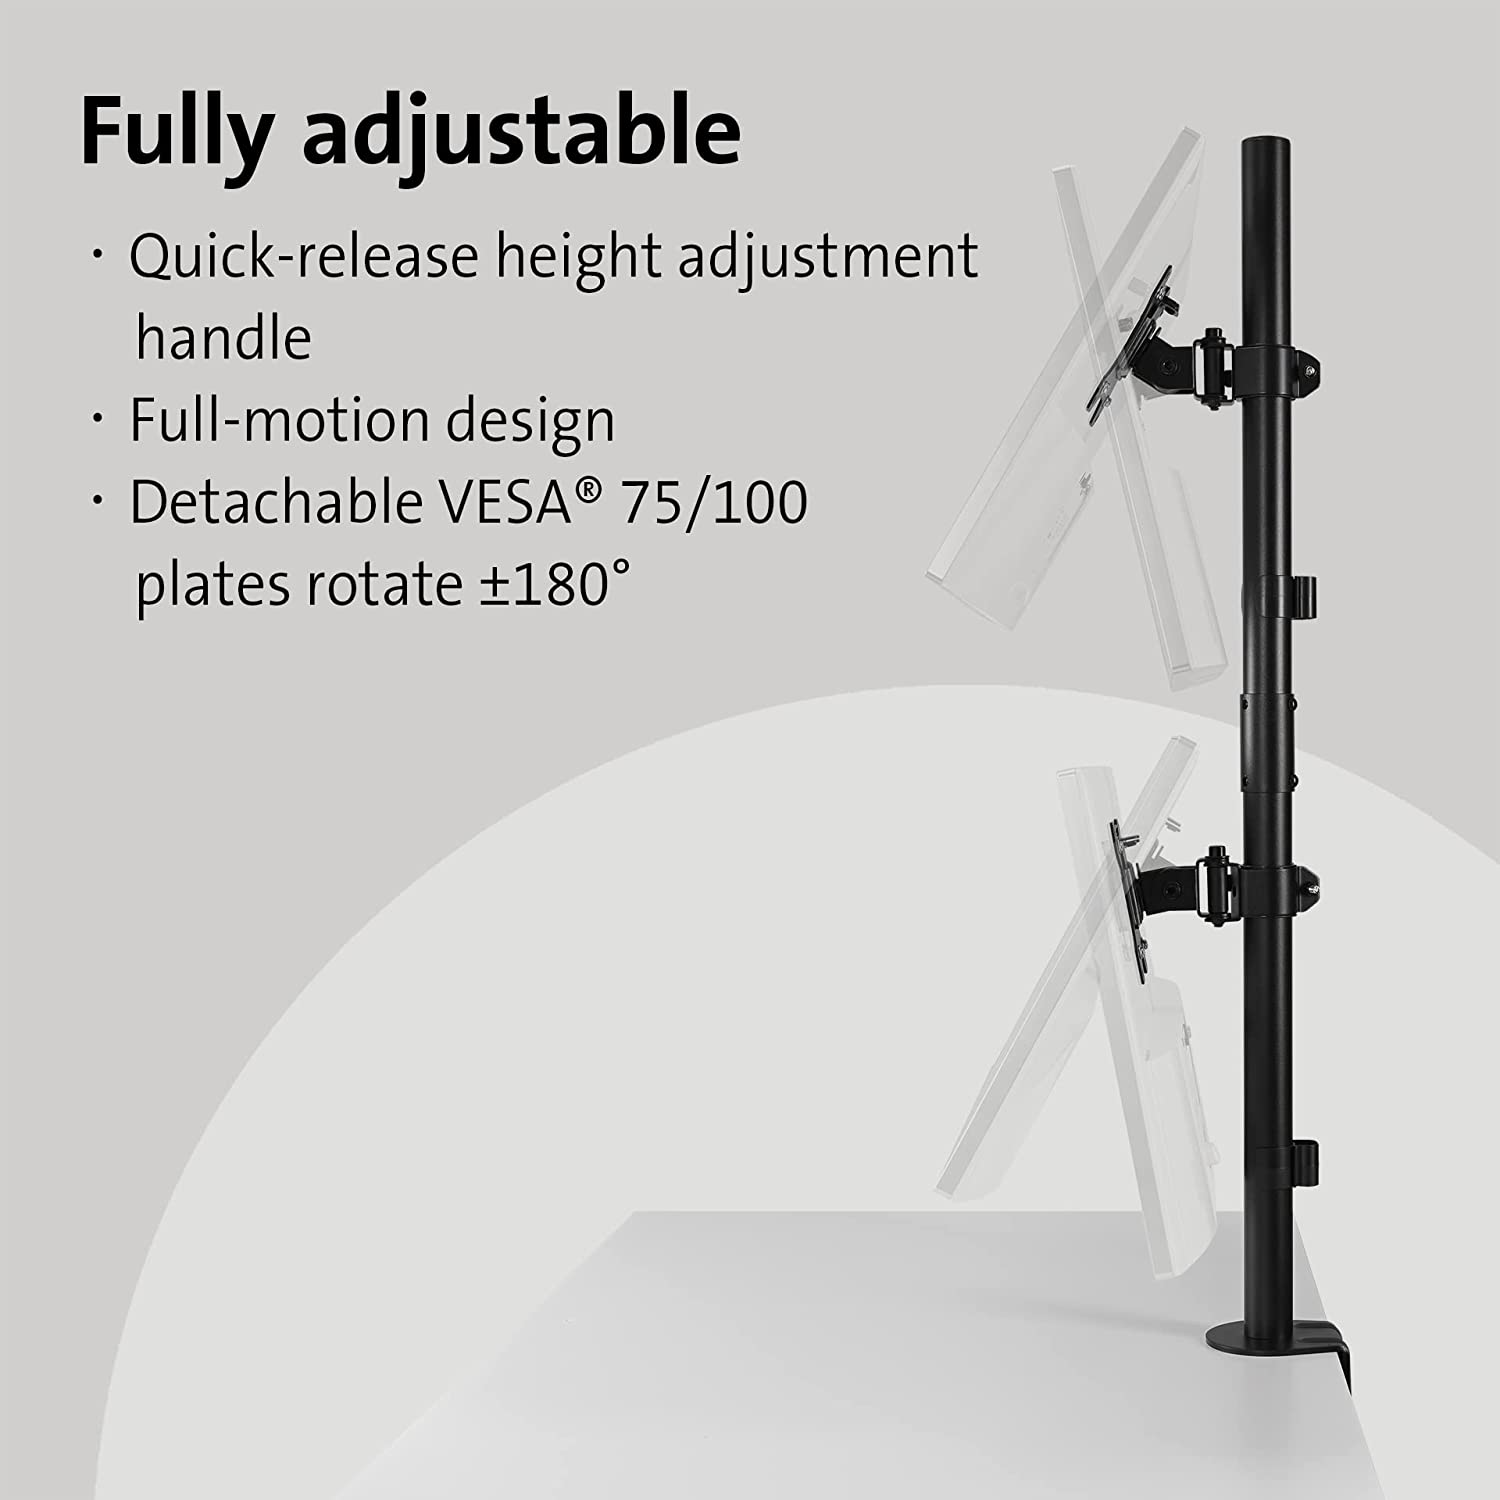 Kensington Vertical Stacking Dual Monitor, VESA 75x75 & 100x100